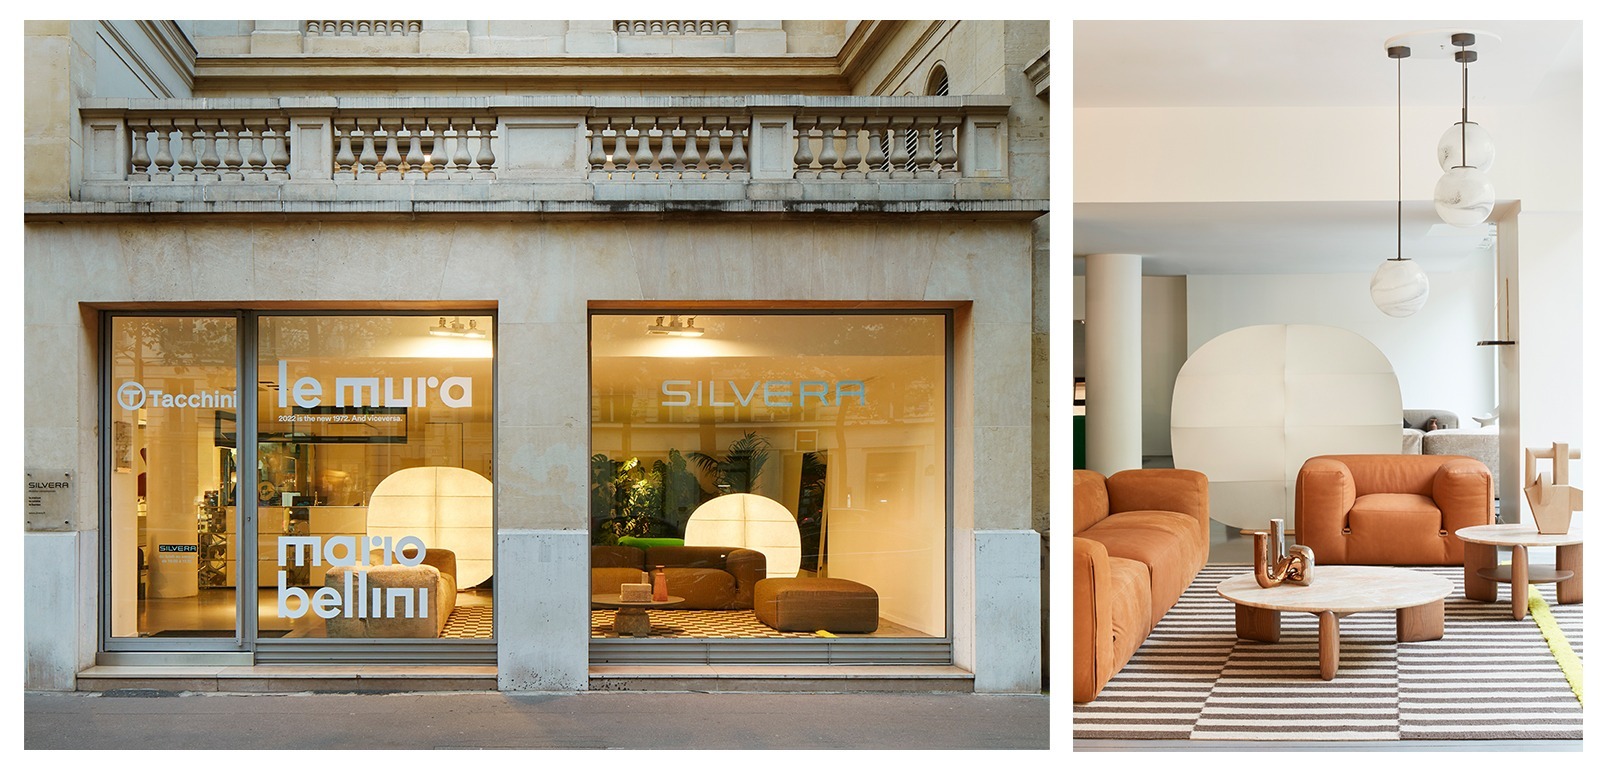 Silvera - Parisian furnishing brand